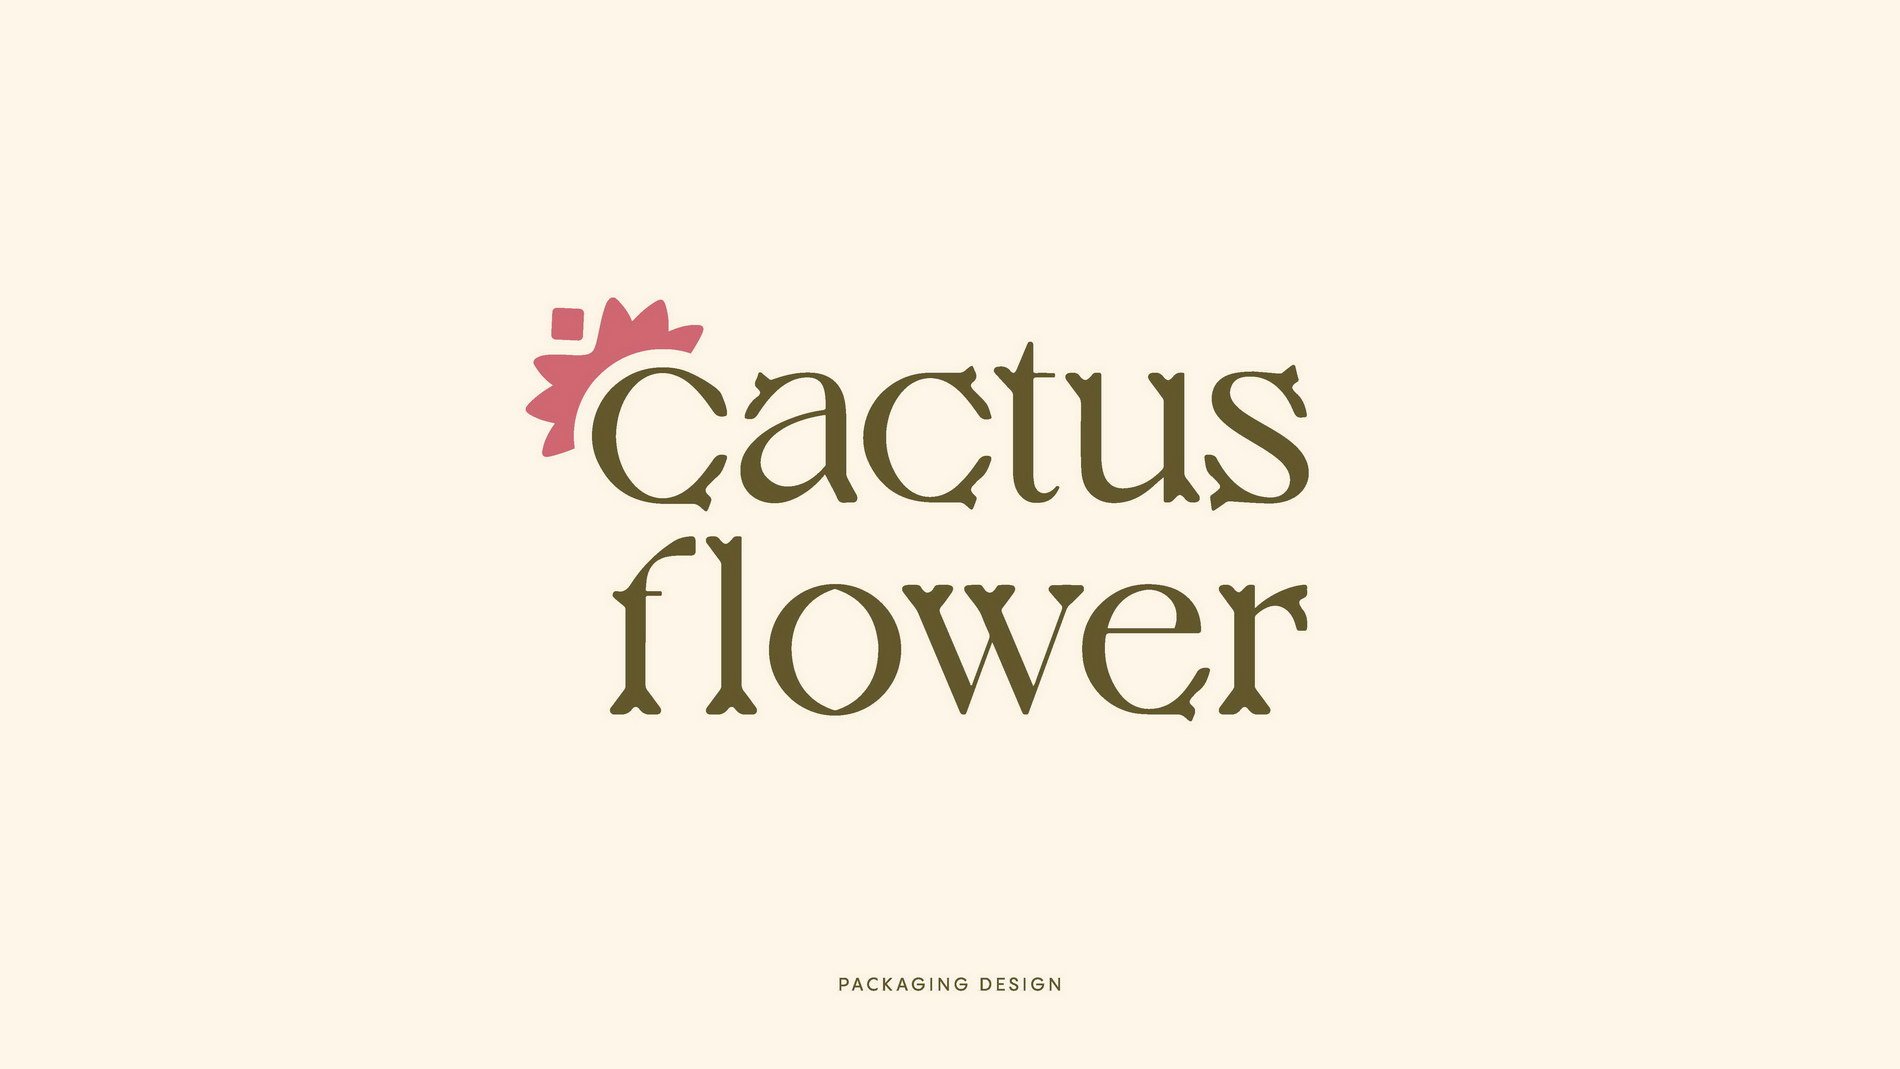 alison-koo-ides-362--cactus-flower--packaging-design--visual-communication-studio-branding-concentration-capilano-university-idea-school-of-design--page-1.jpg